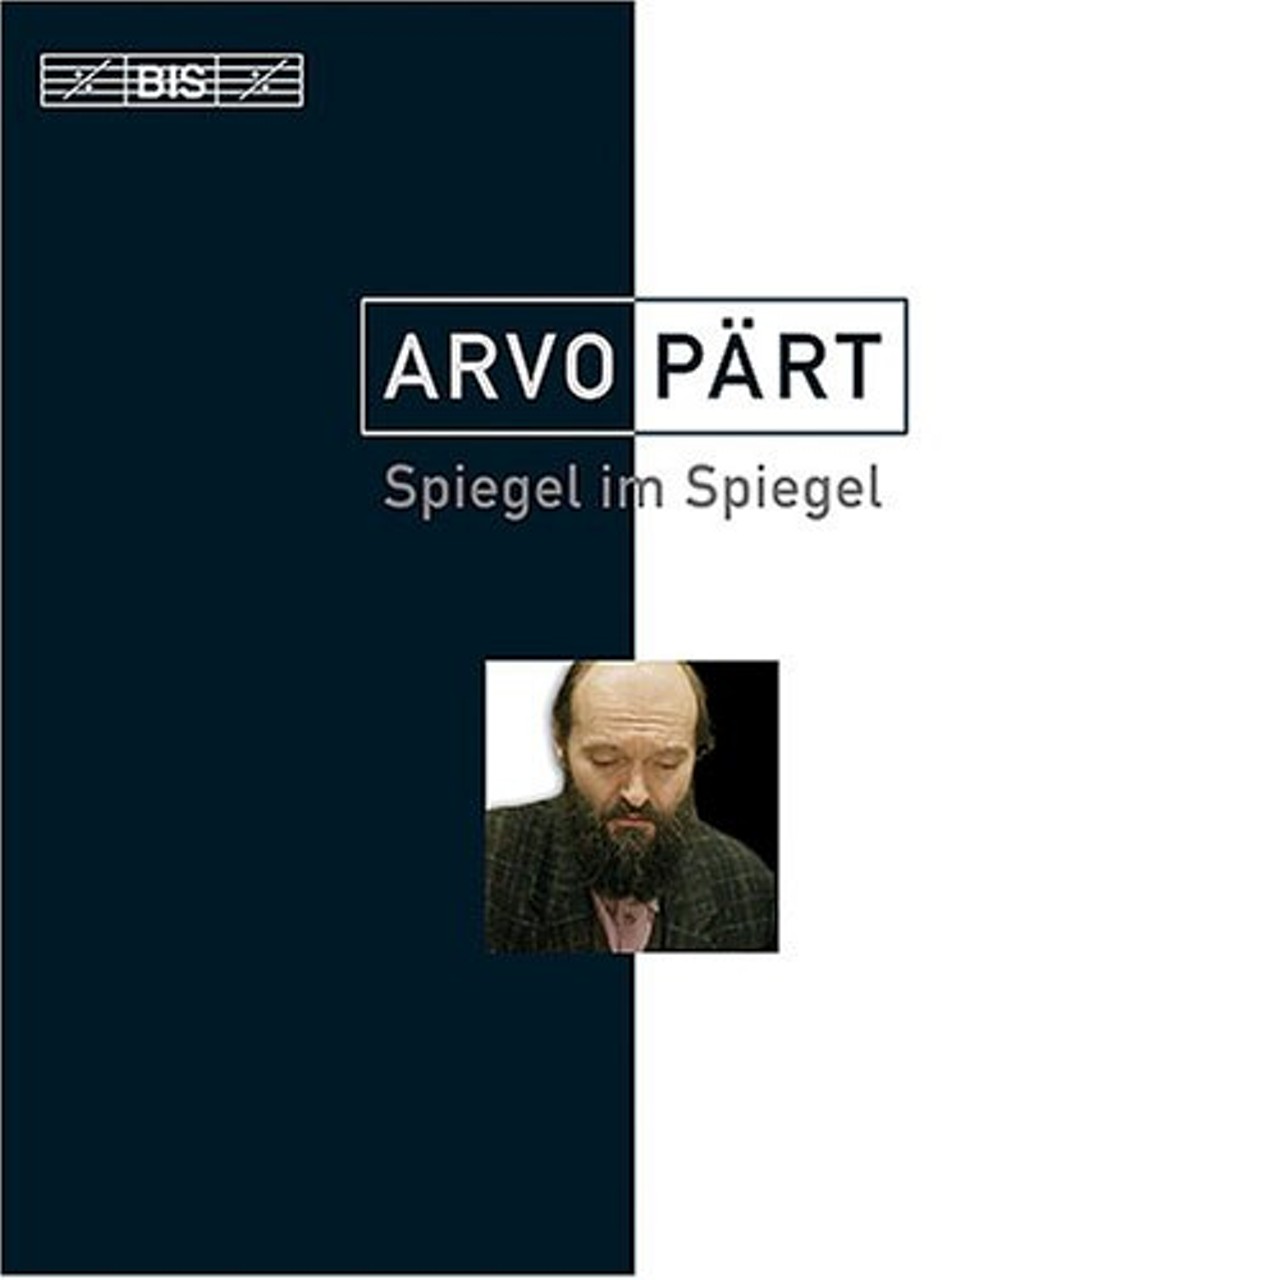 Arvo Part &#150; Spiegel im Spiegel
A soothing album to calm down to or perhaps invoke on a sleepless night.
